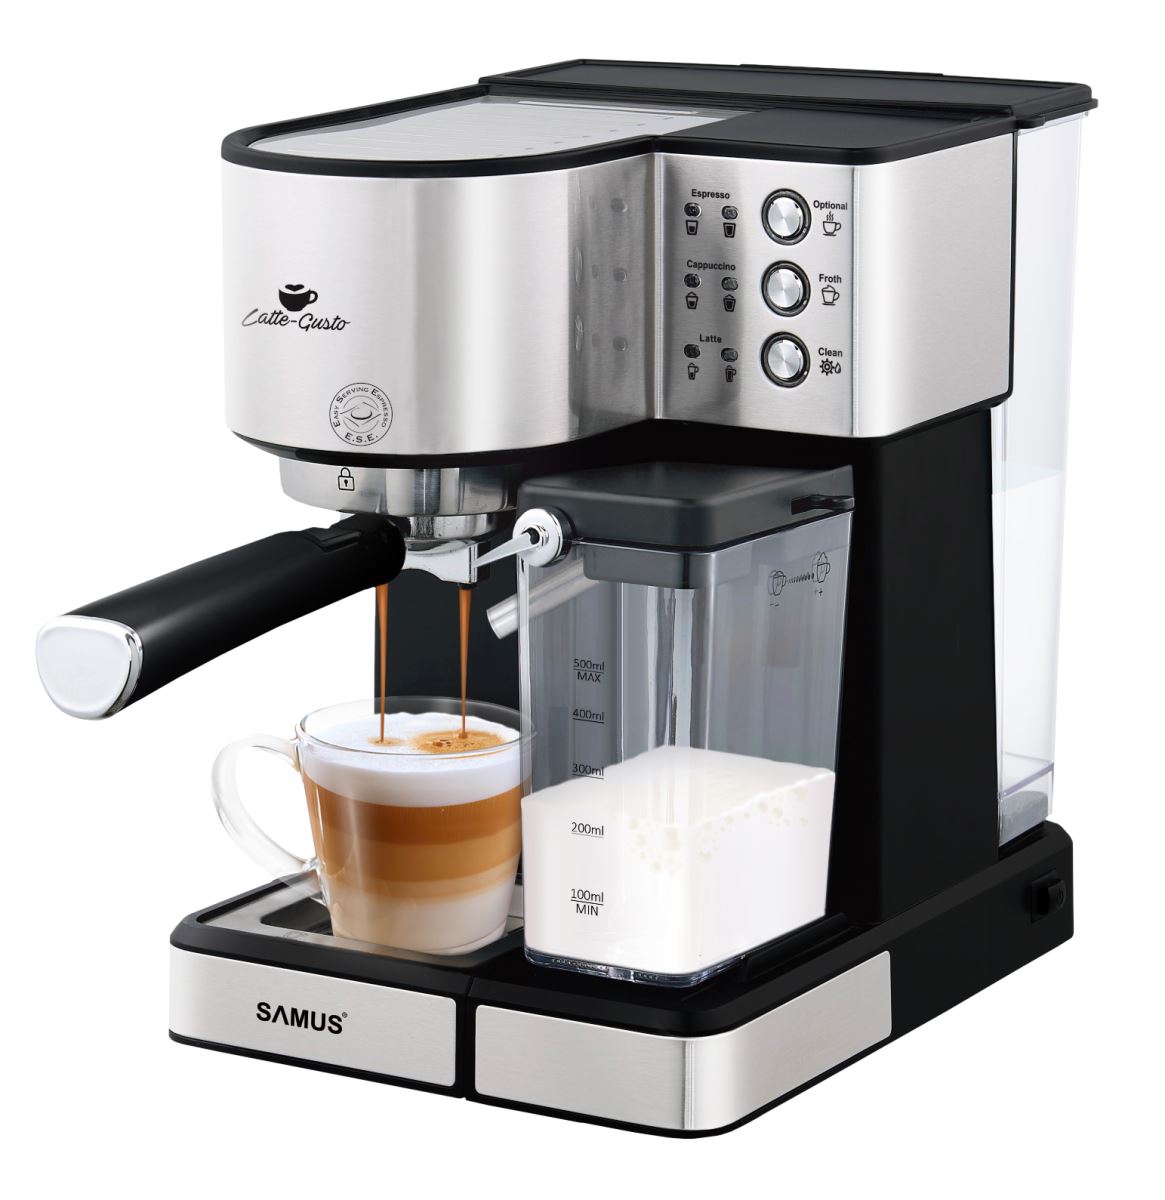 Espressor semi-automat Samus Latte Gusto, 20 bari, 1.8 L, Rezervor lapte 0.5 L, Functie Capuccino, Functie Latte, Functie de curatare, Duza abur pentru cappuccino, Compatibil PAD-uri ESE, Gri/Inox